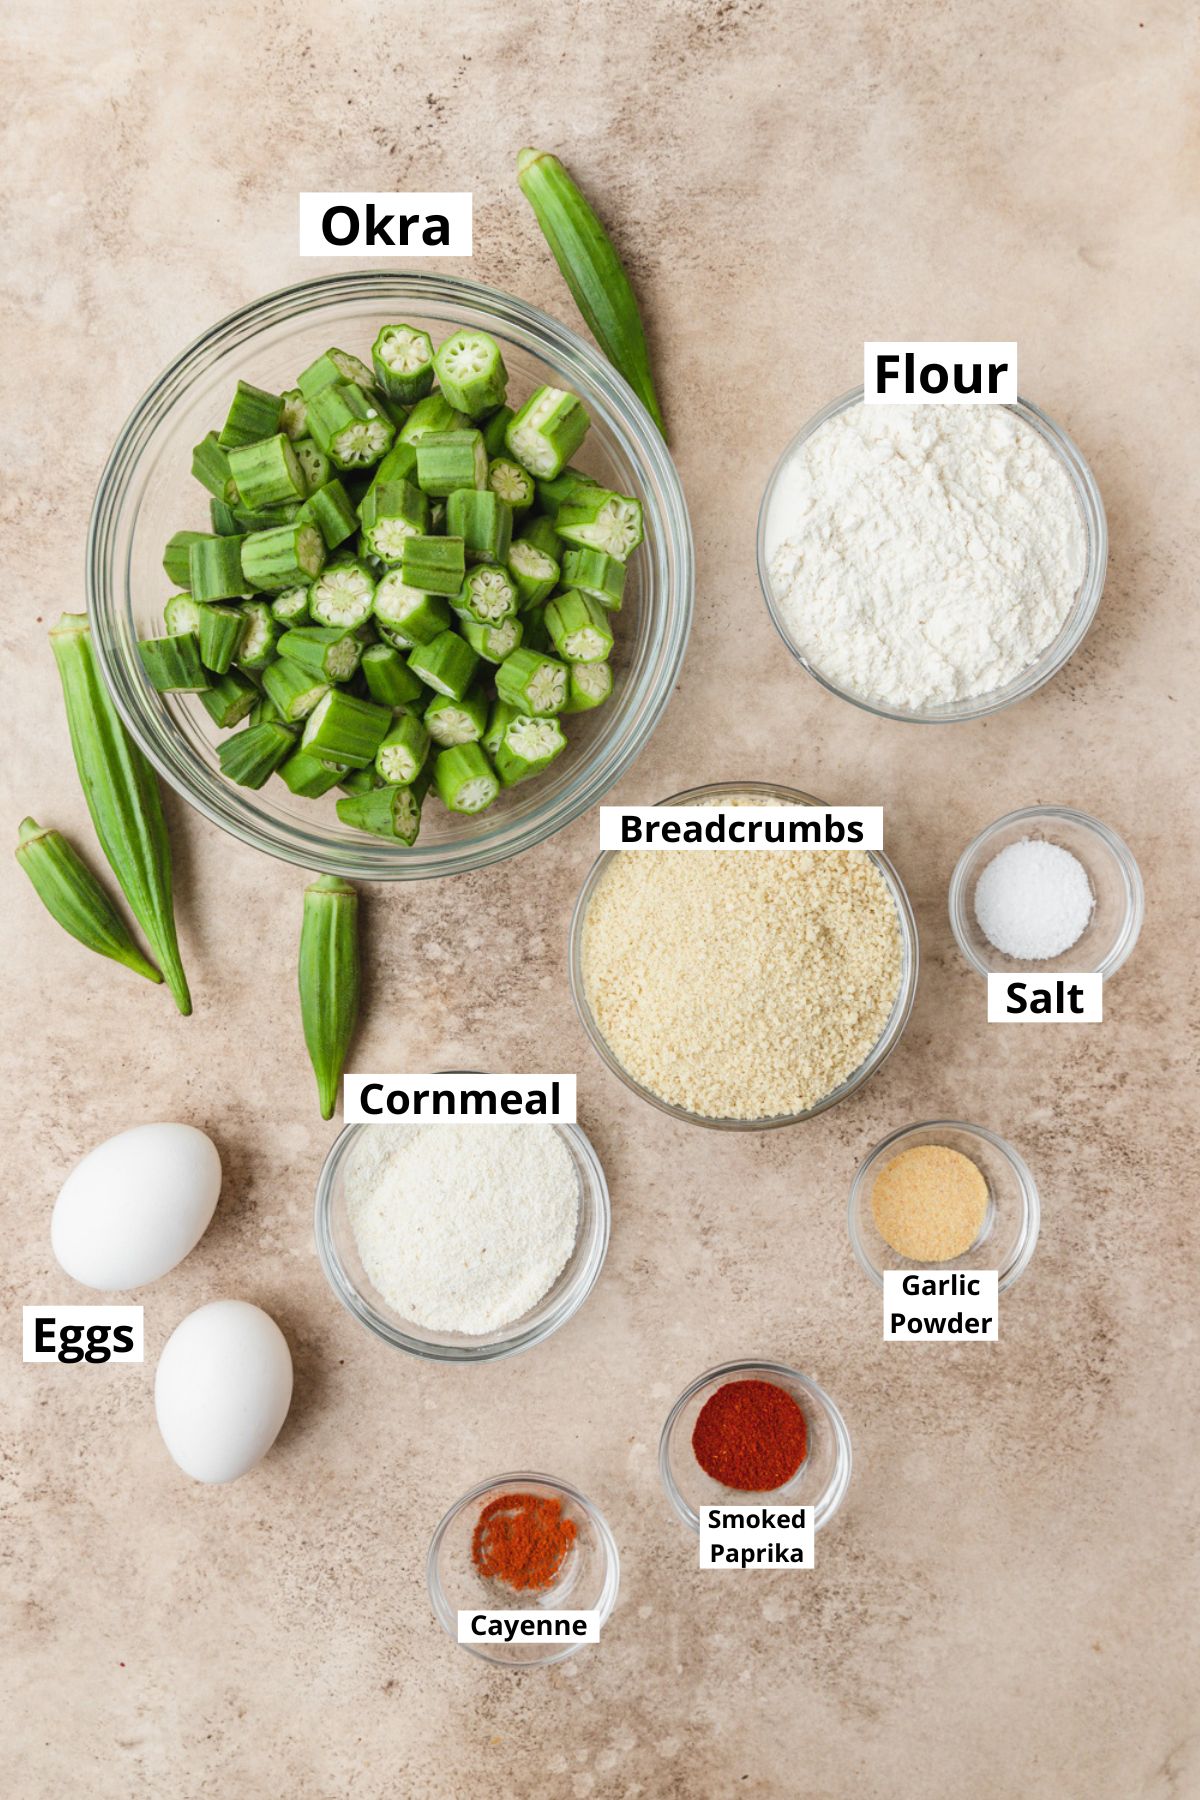 ingredients for fried okra.